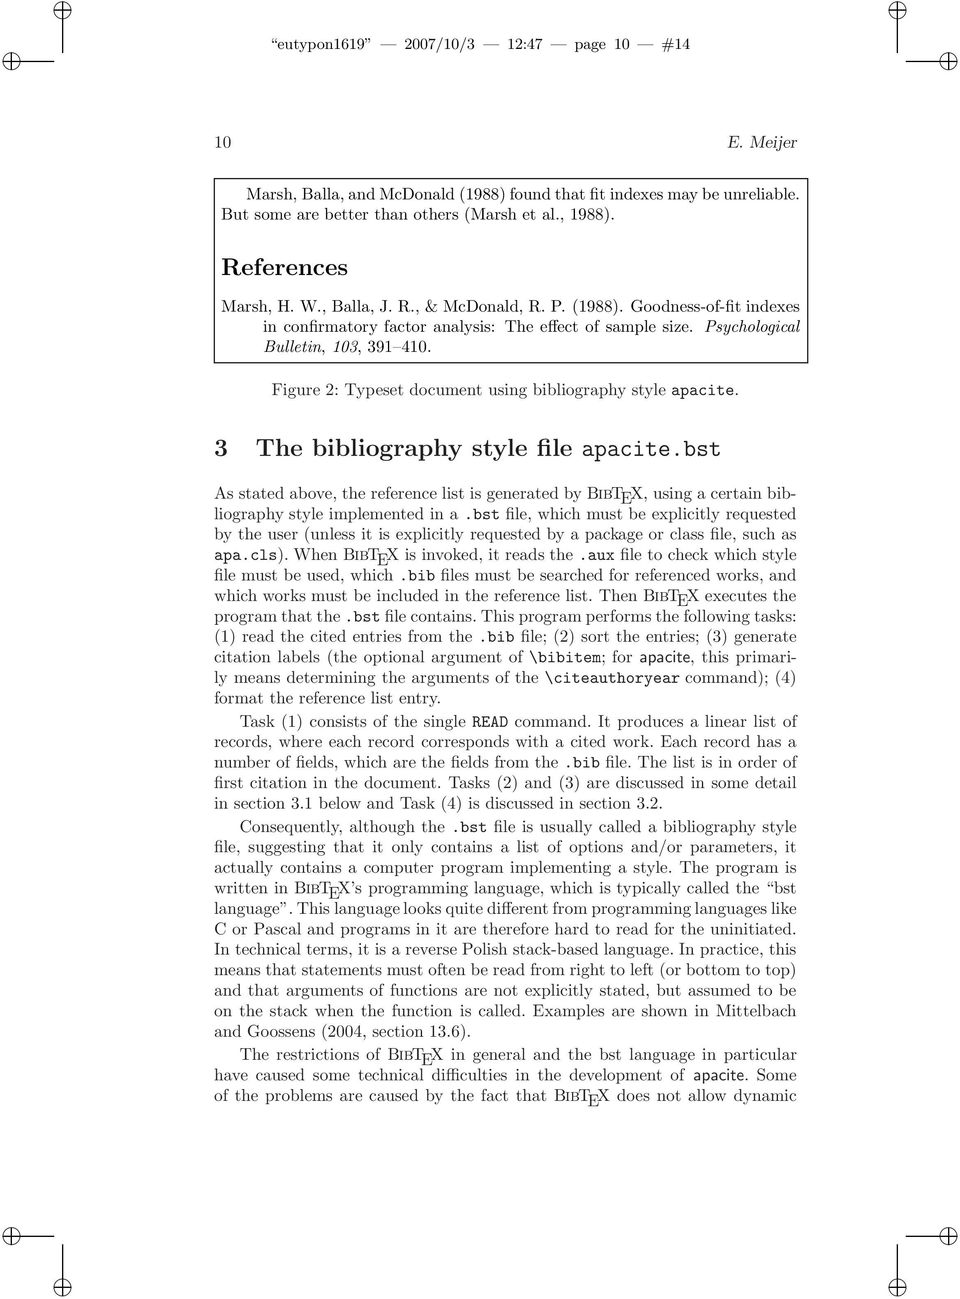 Figure 2: Typeset document using bibliography style apacite. 3 The bibliography style file apacite.